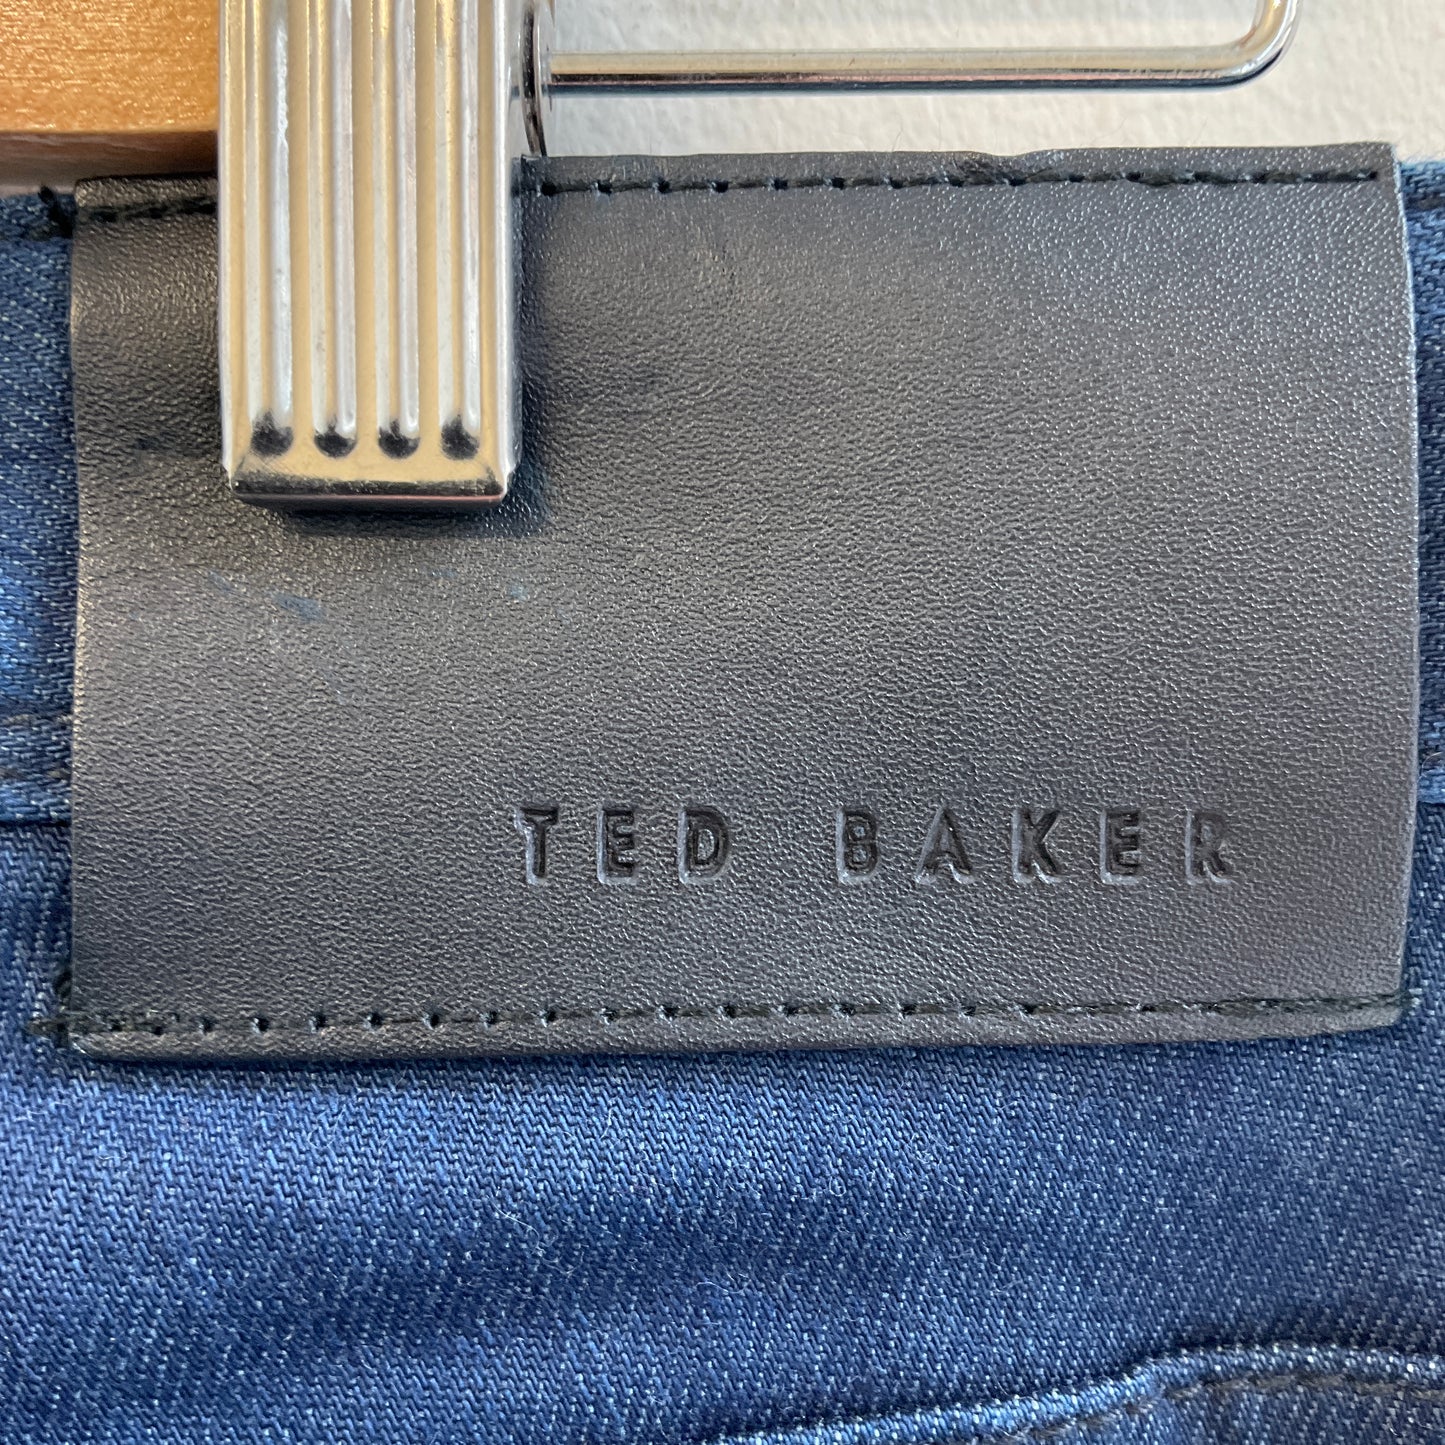 Ted Baker - Men's Jeans